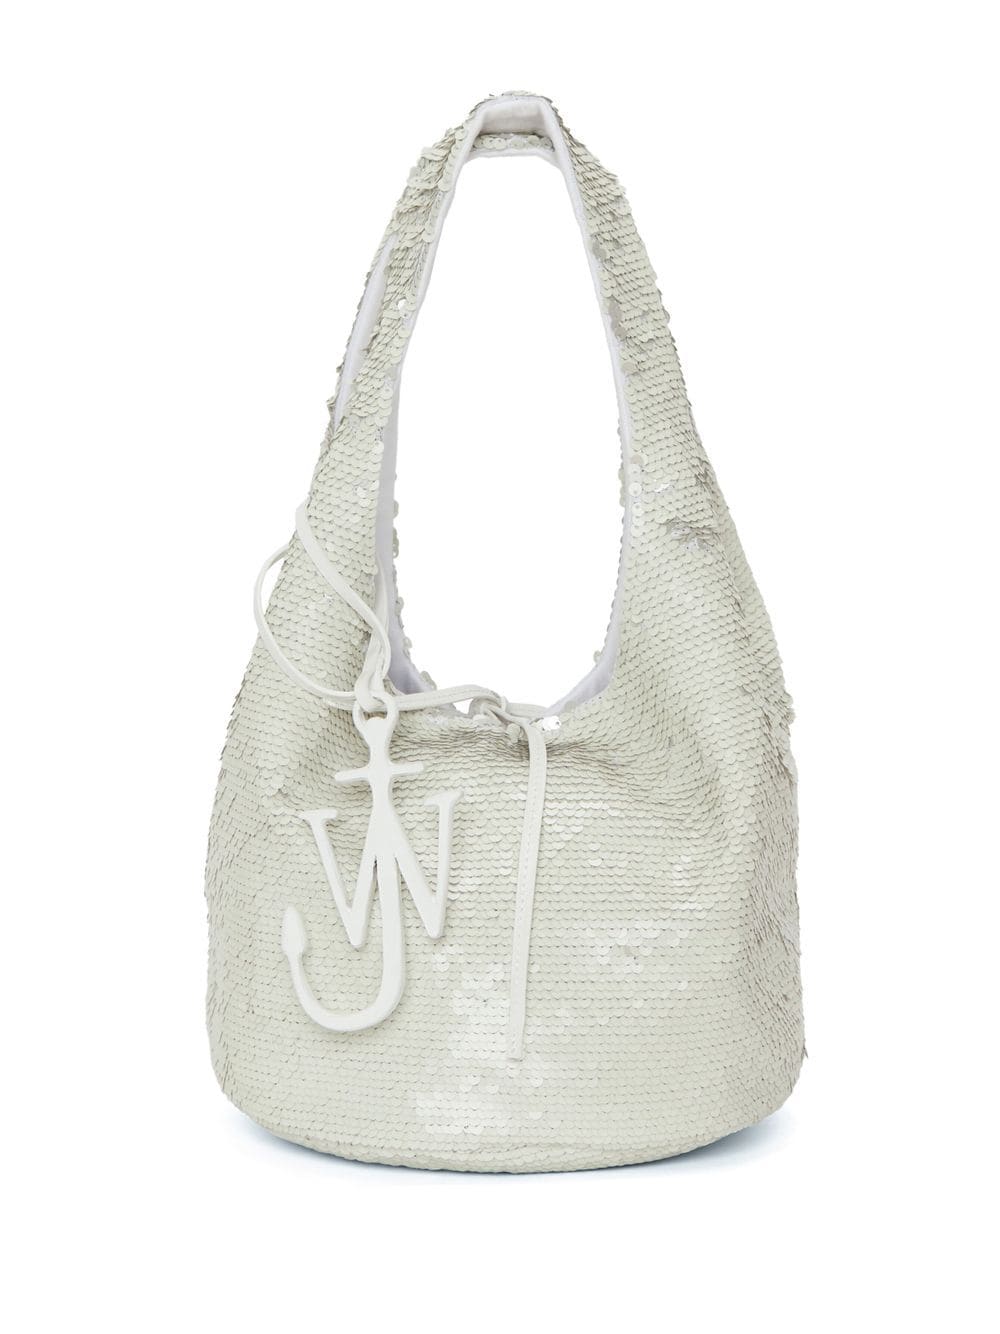 JW Anderson sequin-embellished mini tote bag - White